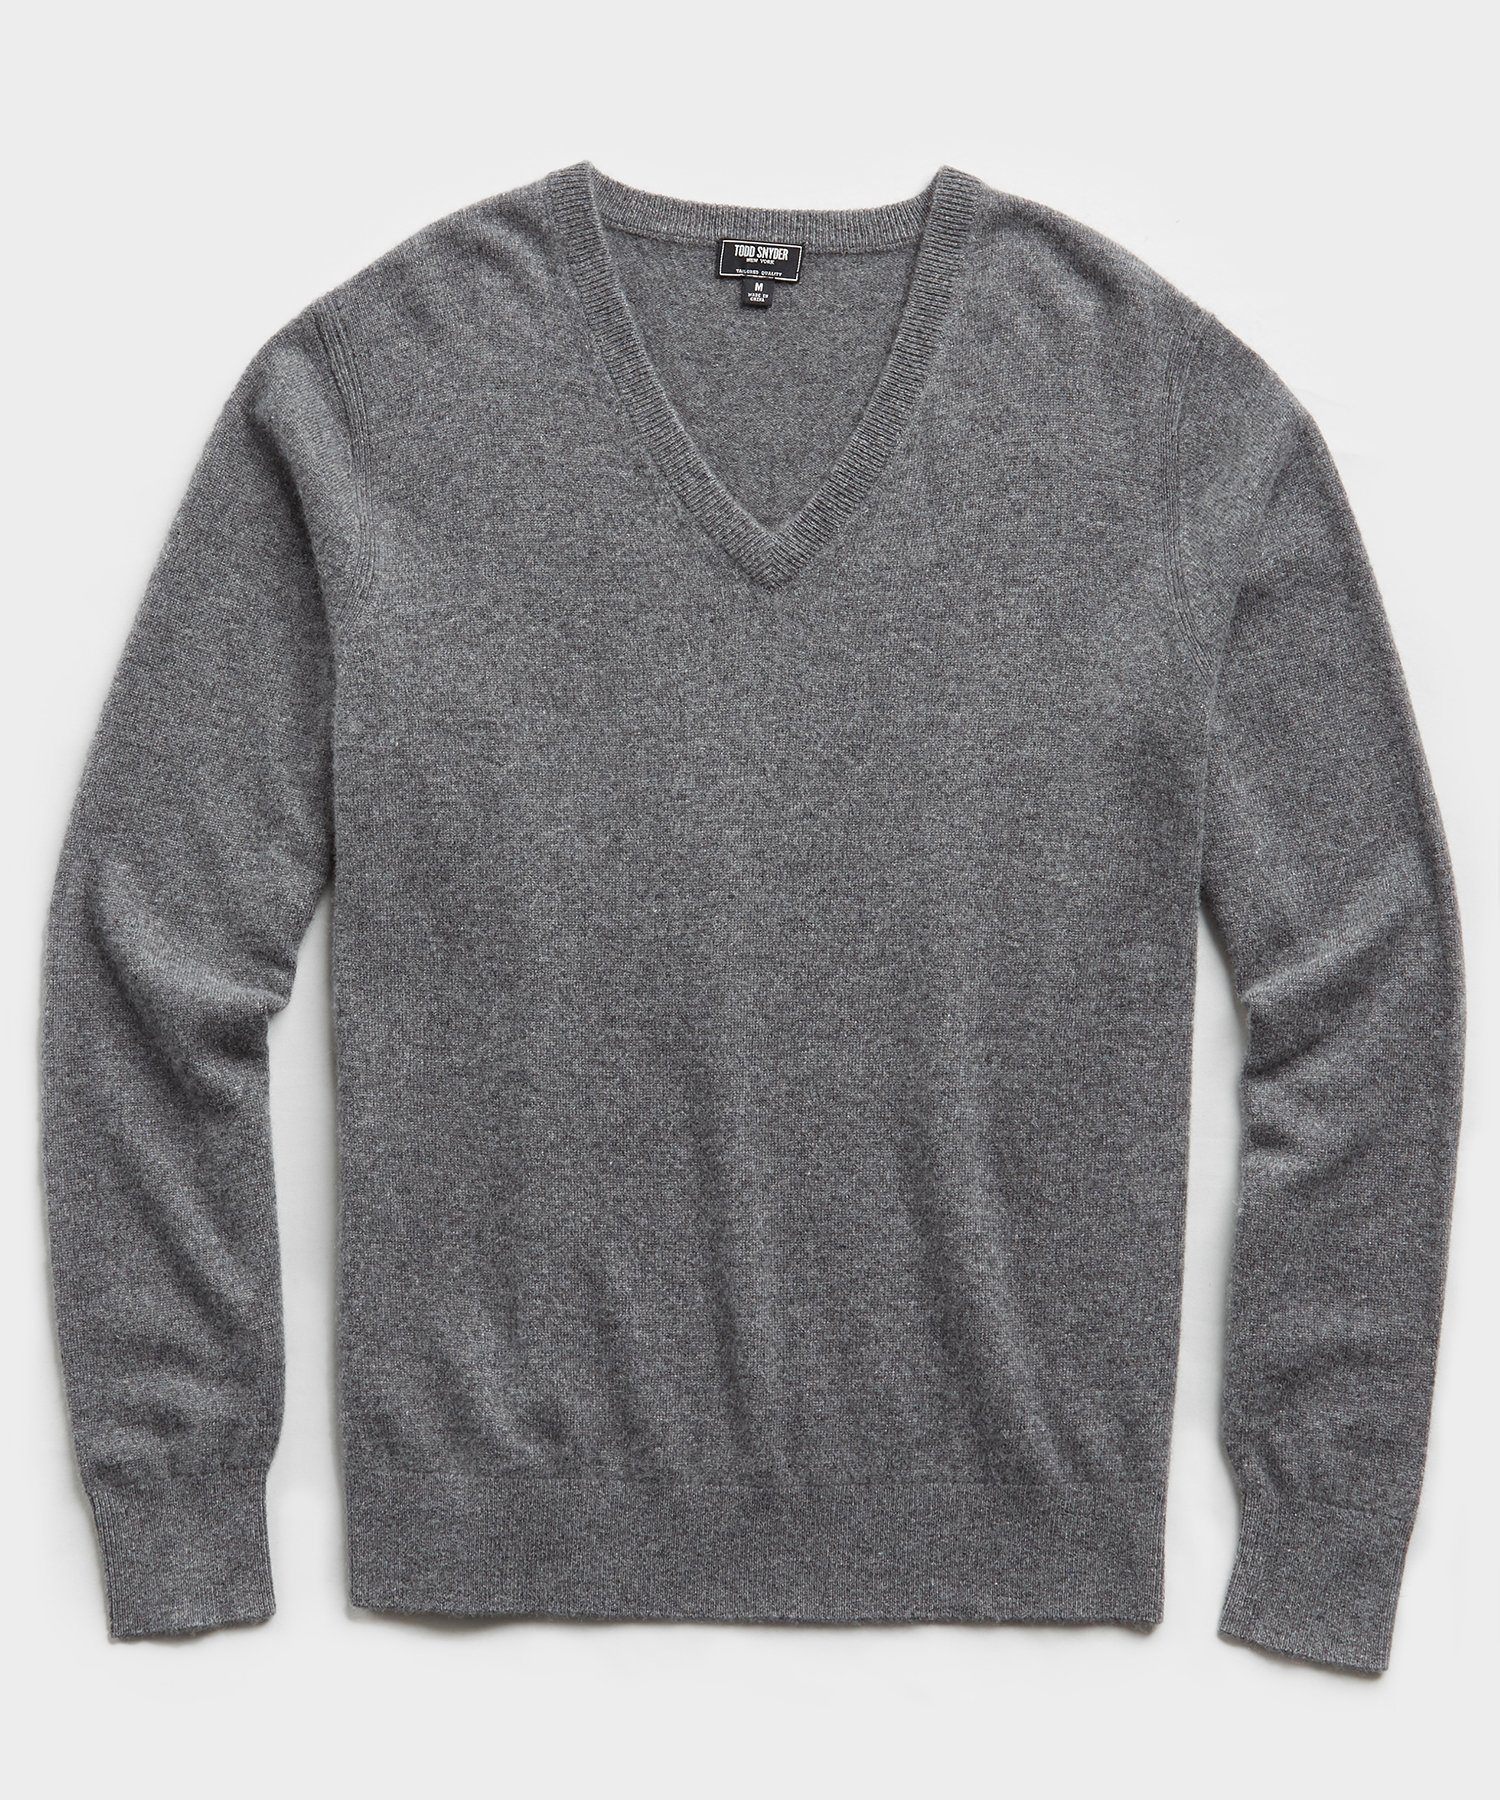 Cashmere V-neck Sweater in Grey | The Fashionisto